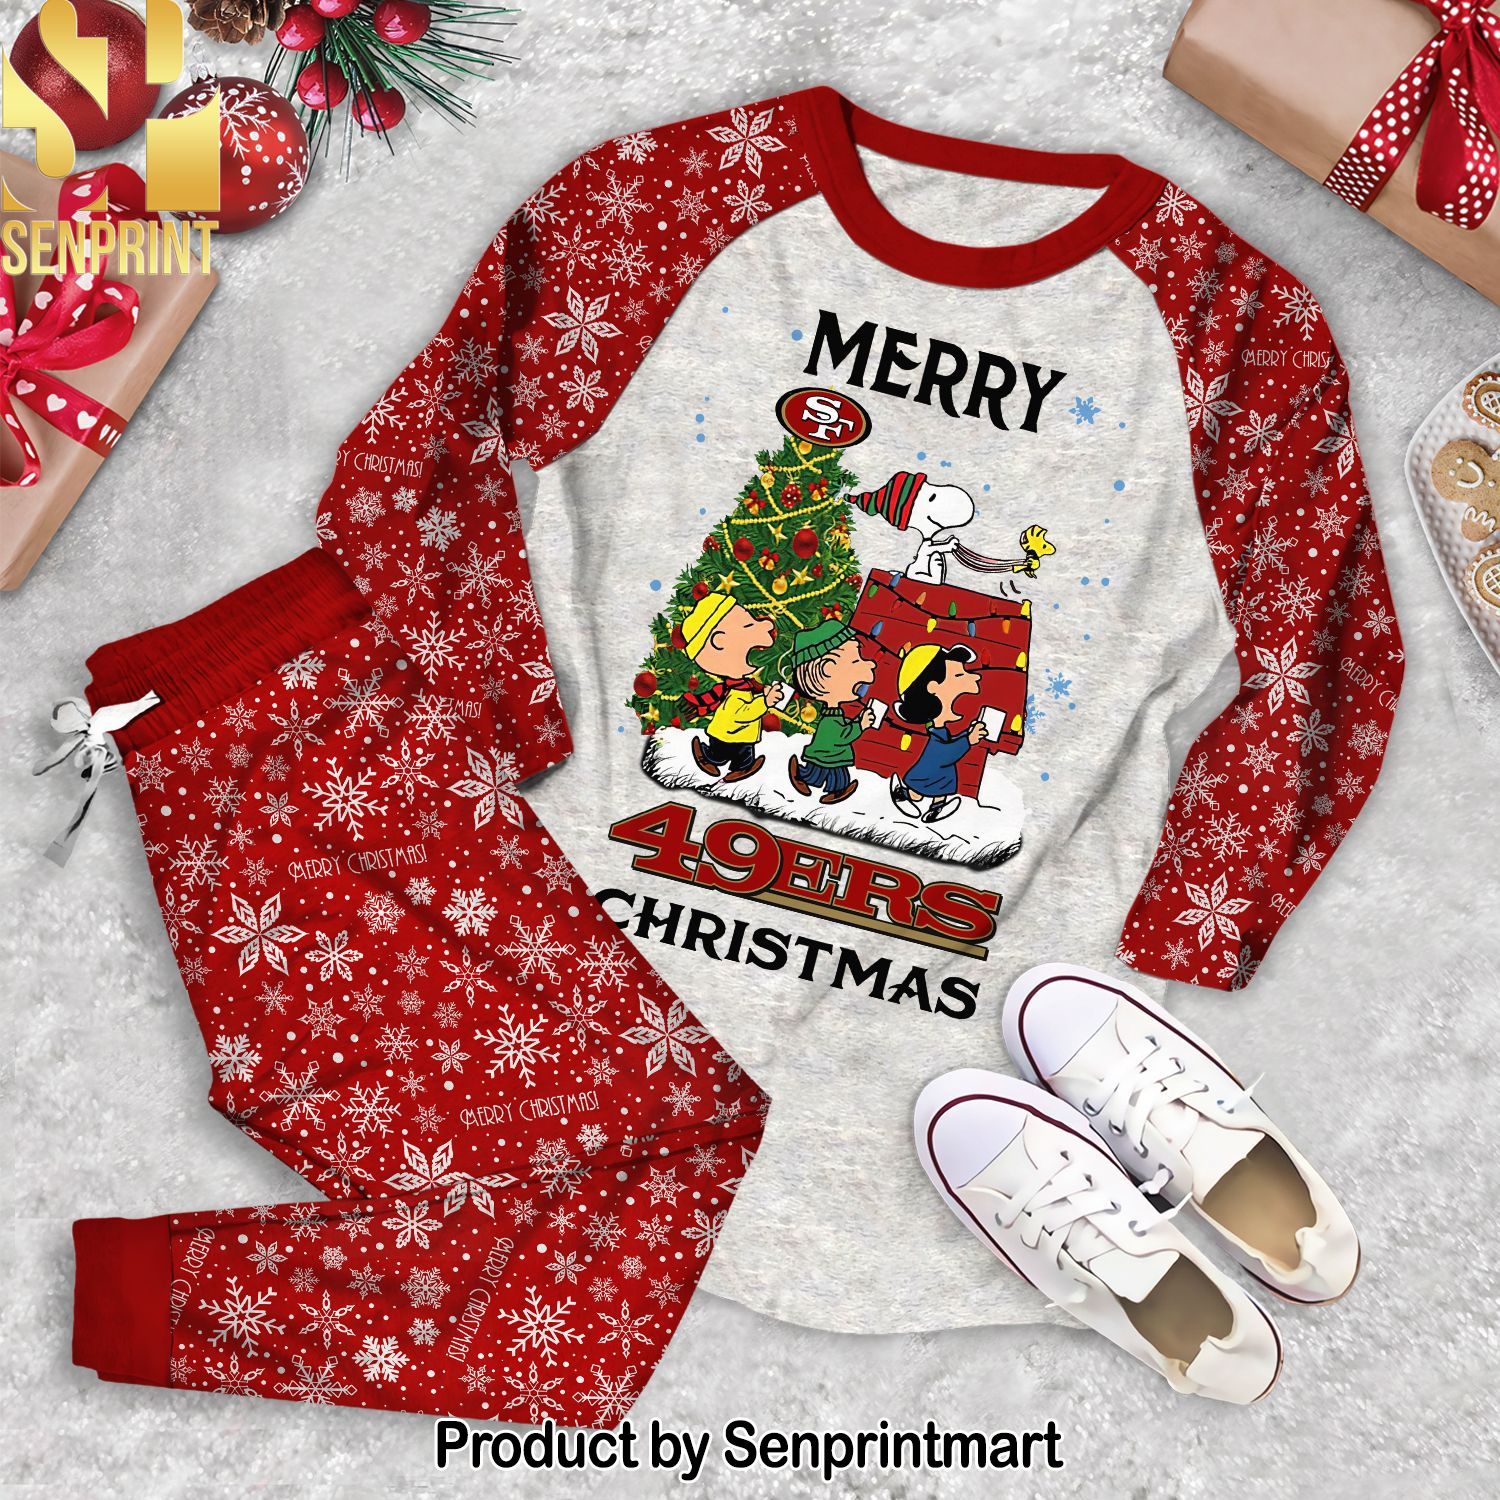 Merry San Francisco 49ers Christmas Peanuts All Over Print Classic Pajamas Set